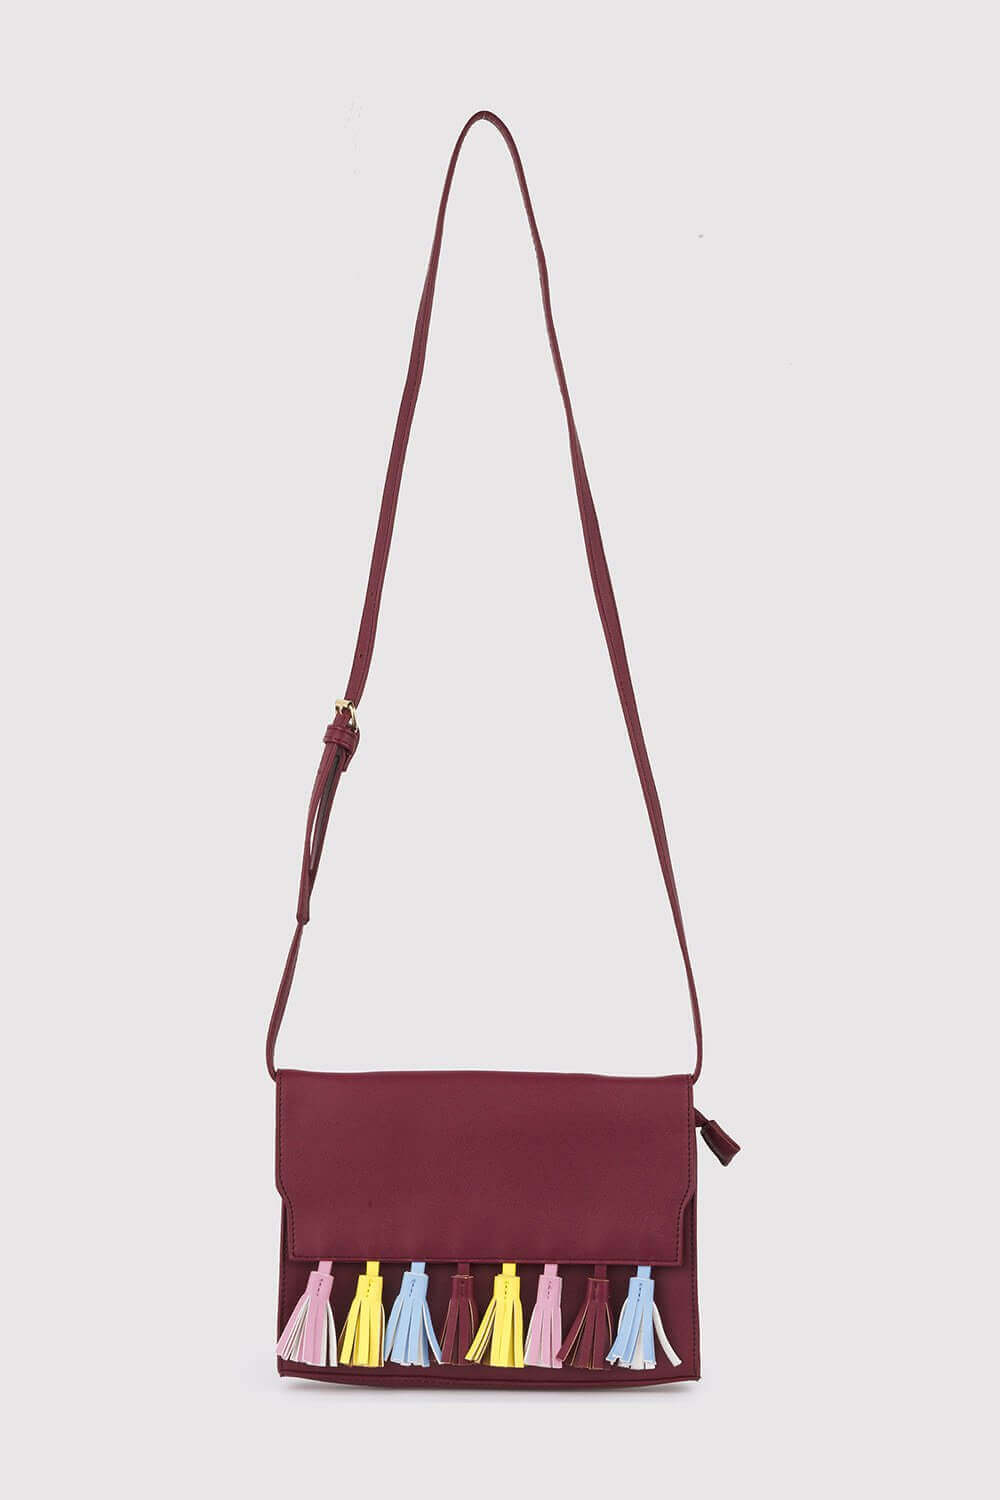 Avelino Faux Leather Cross Body Adjustable Strap Multi-Coloured Tassel Bag in Burgundy